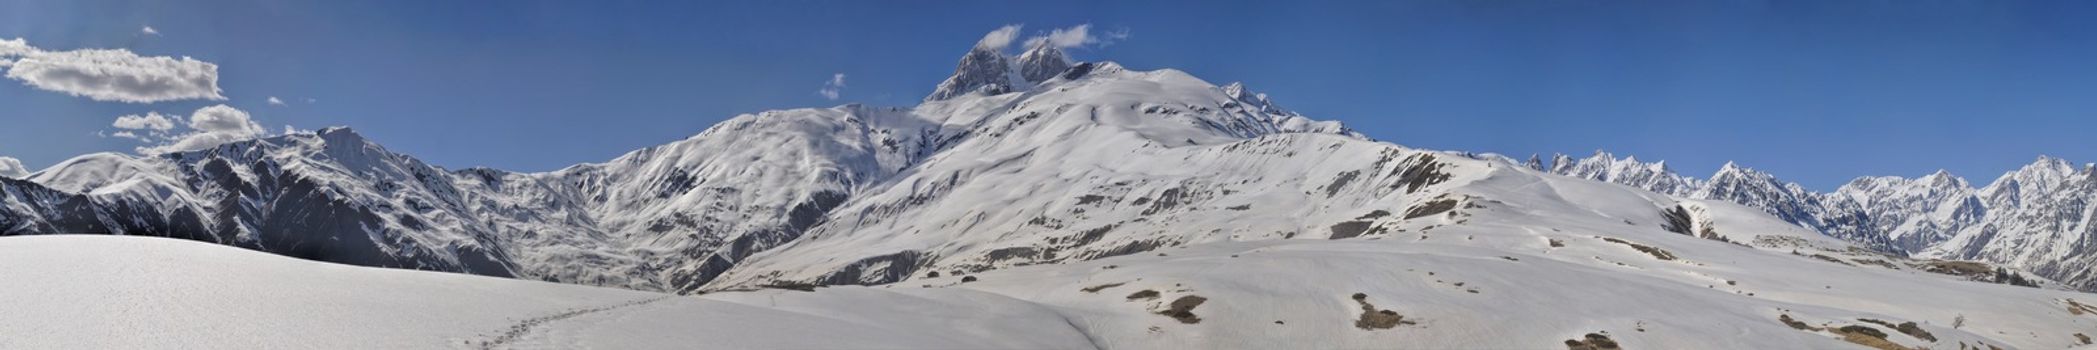 Scenic panorama of Caucasus mountains covered in snow, Svaneti, Georgia